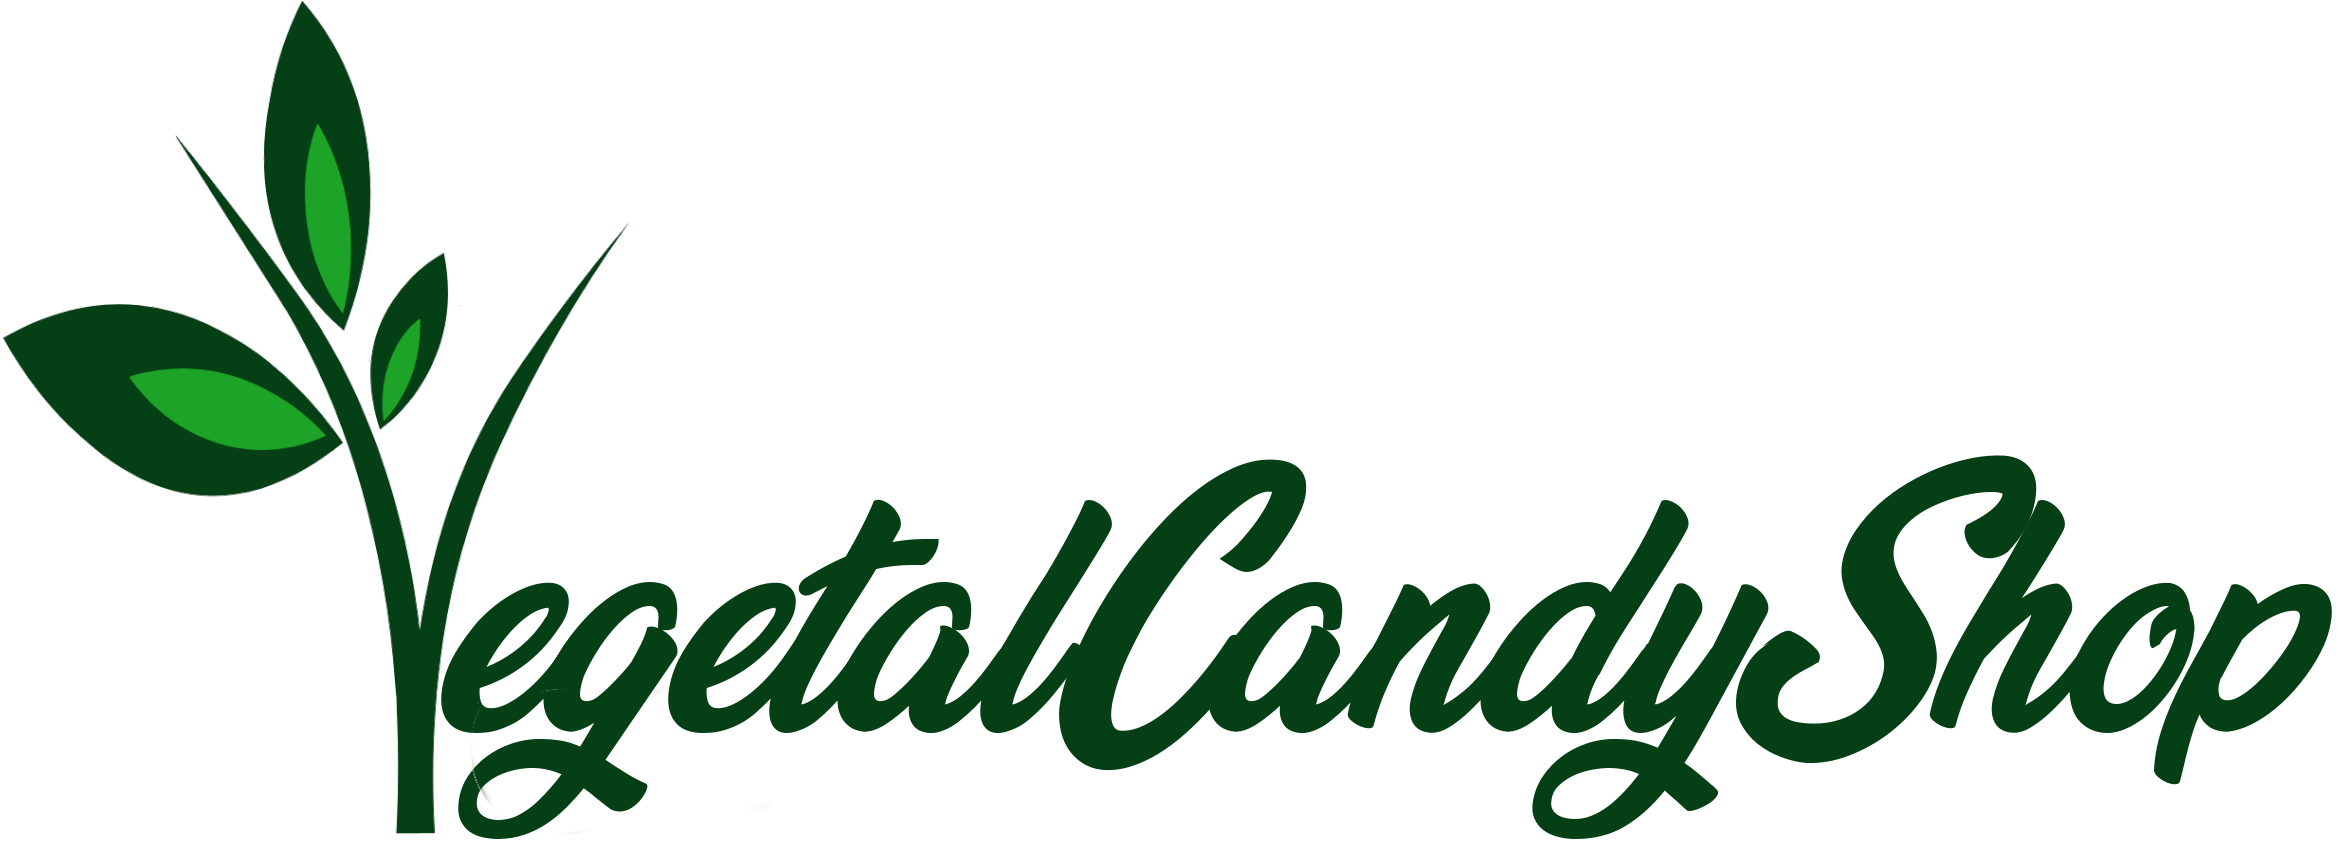 Vegetal Candy Shop - Logo